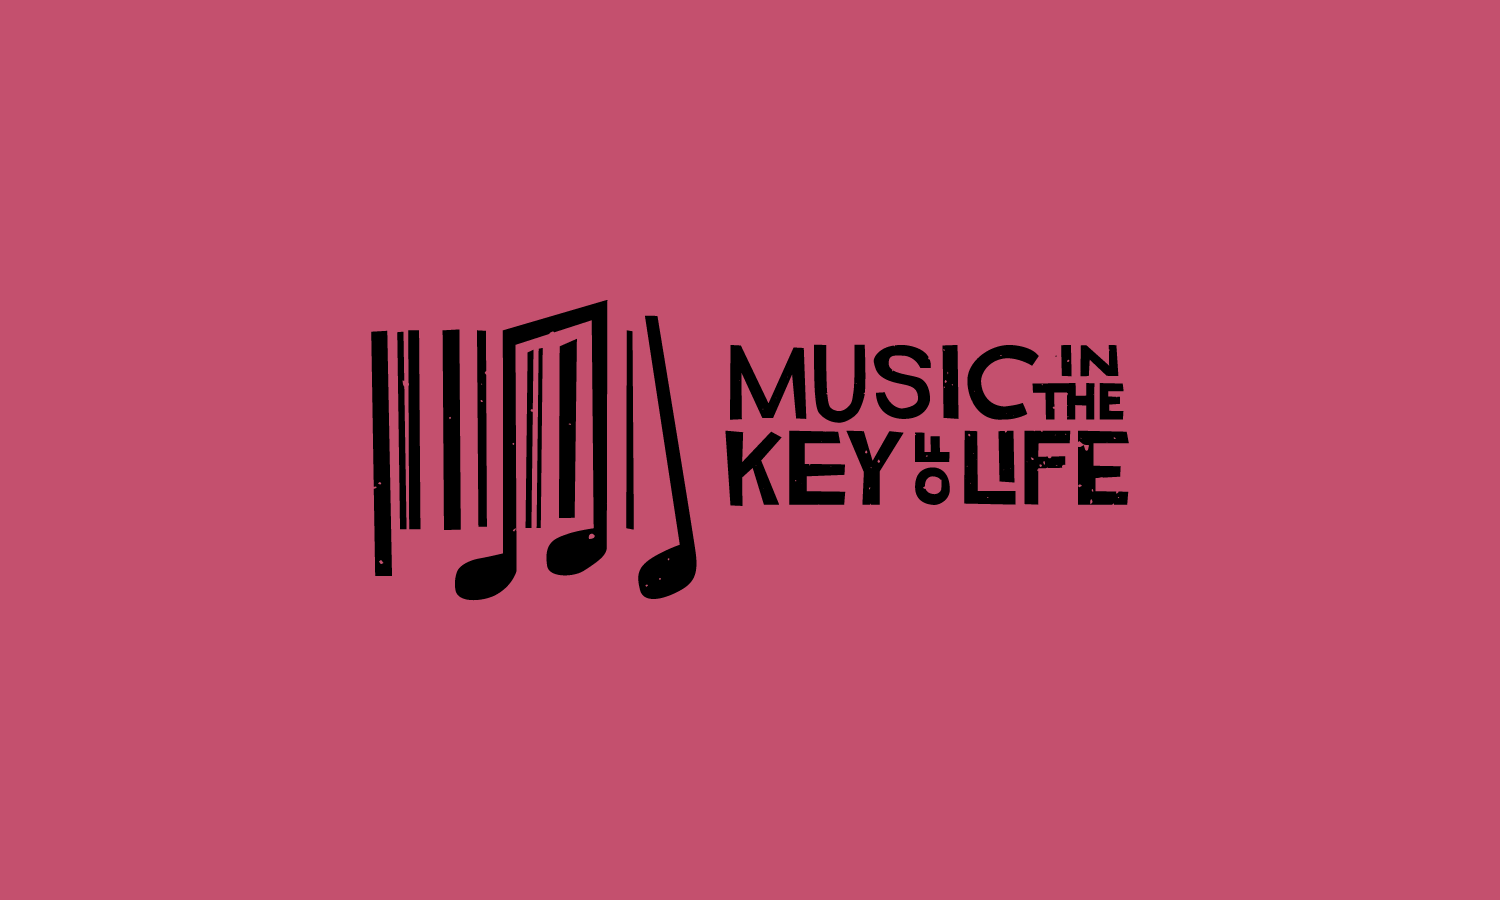 Music in the Key of Life by Viktor Lanneld and Tedde Twetman